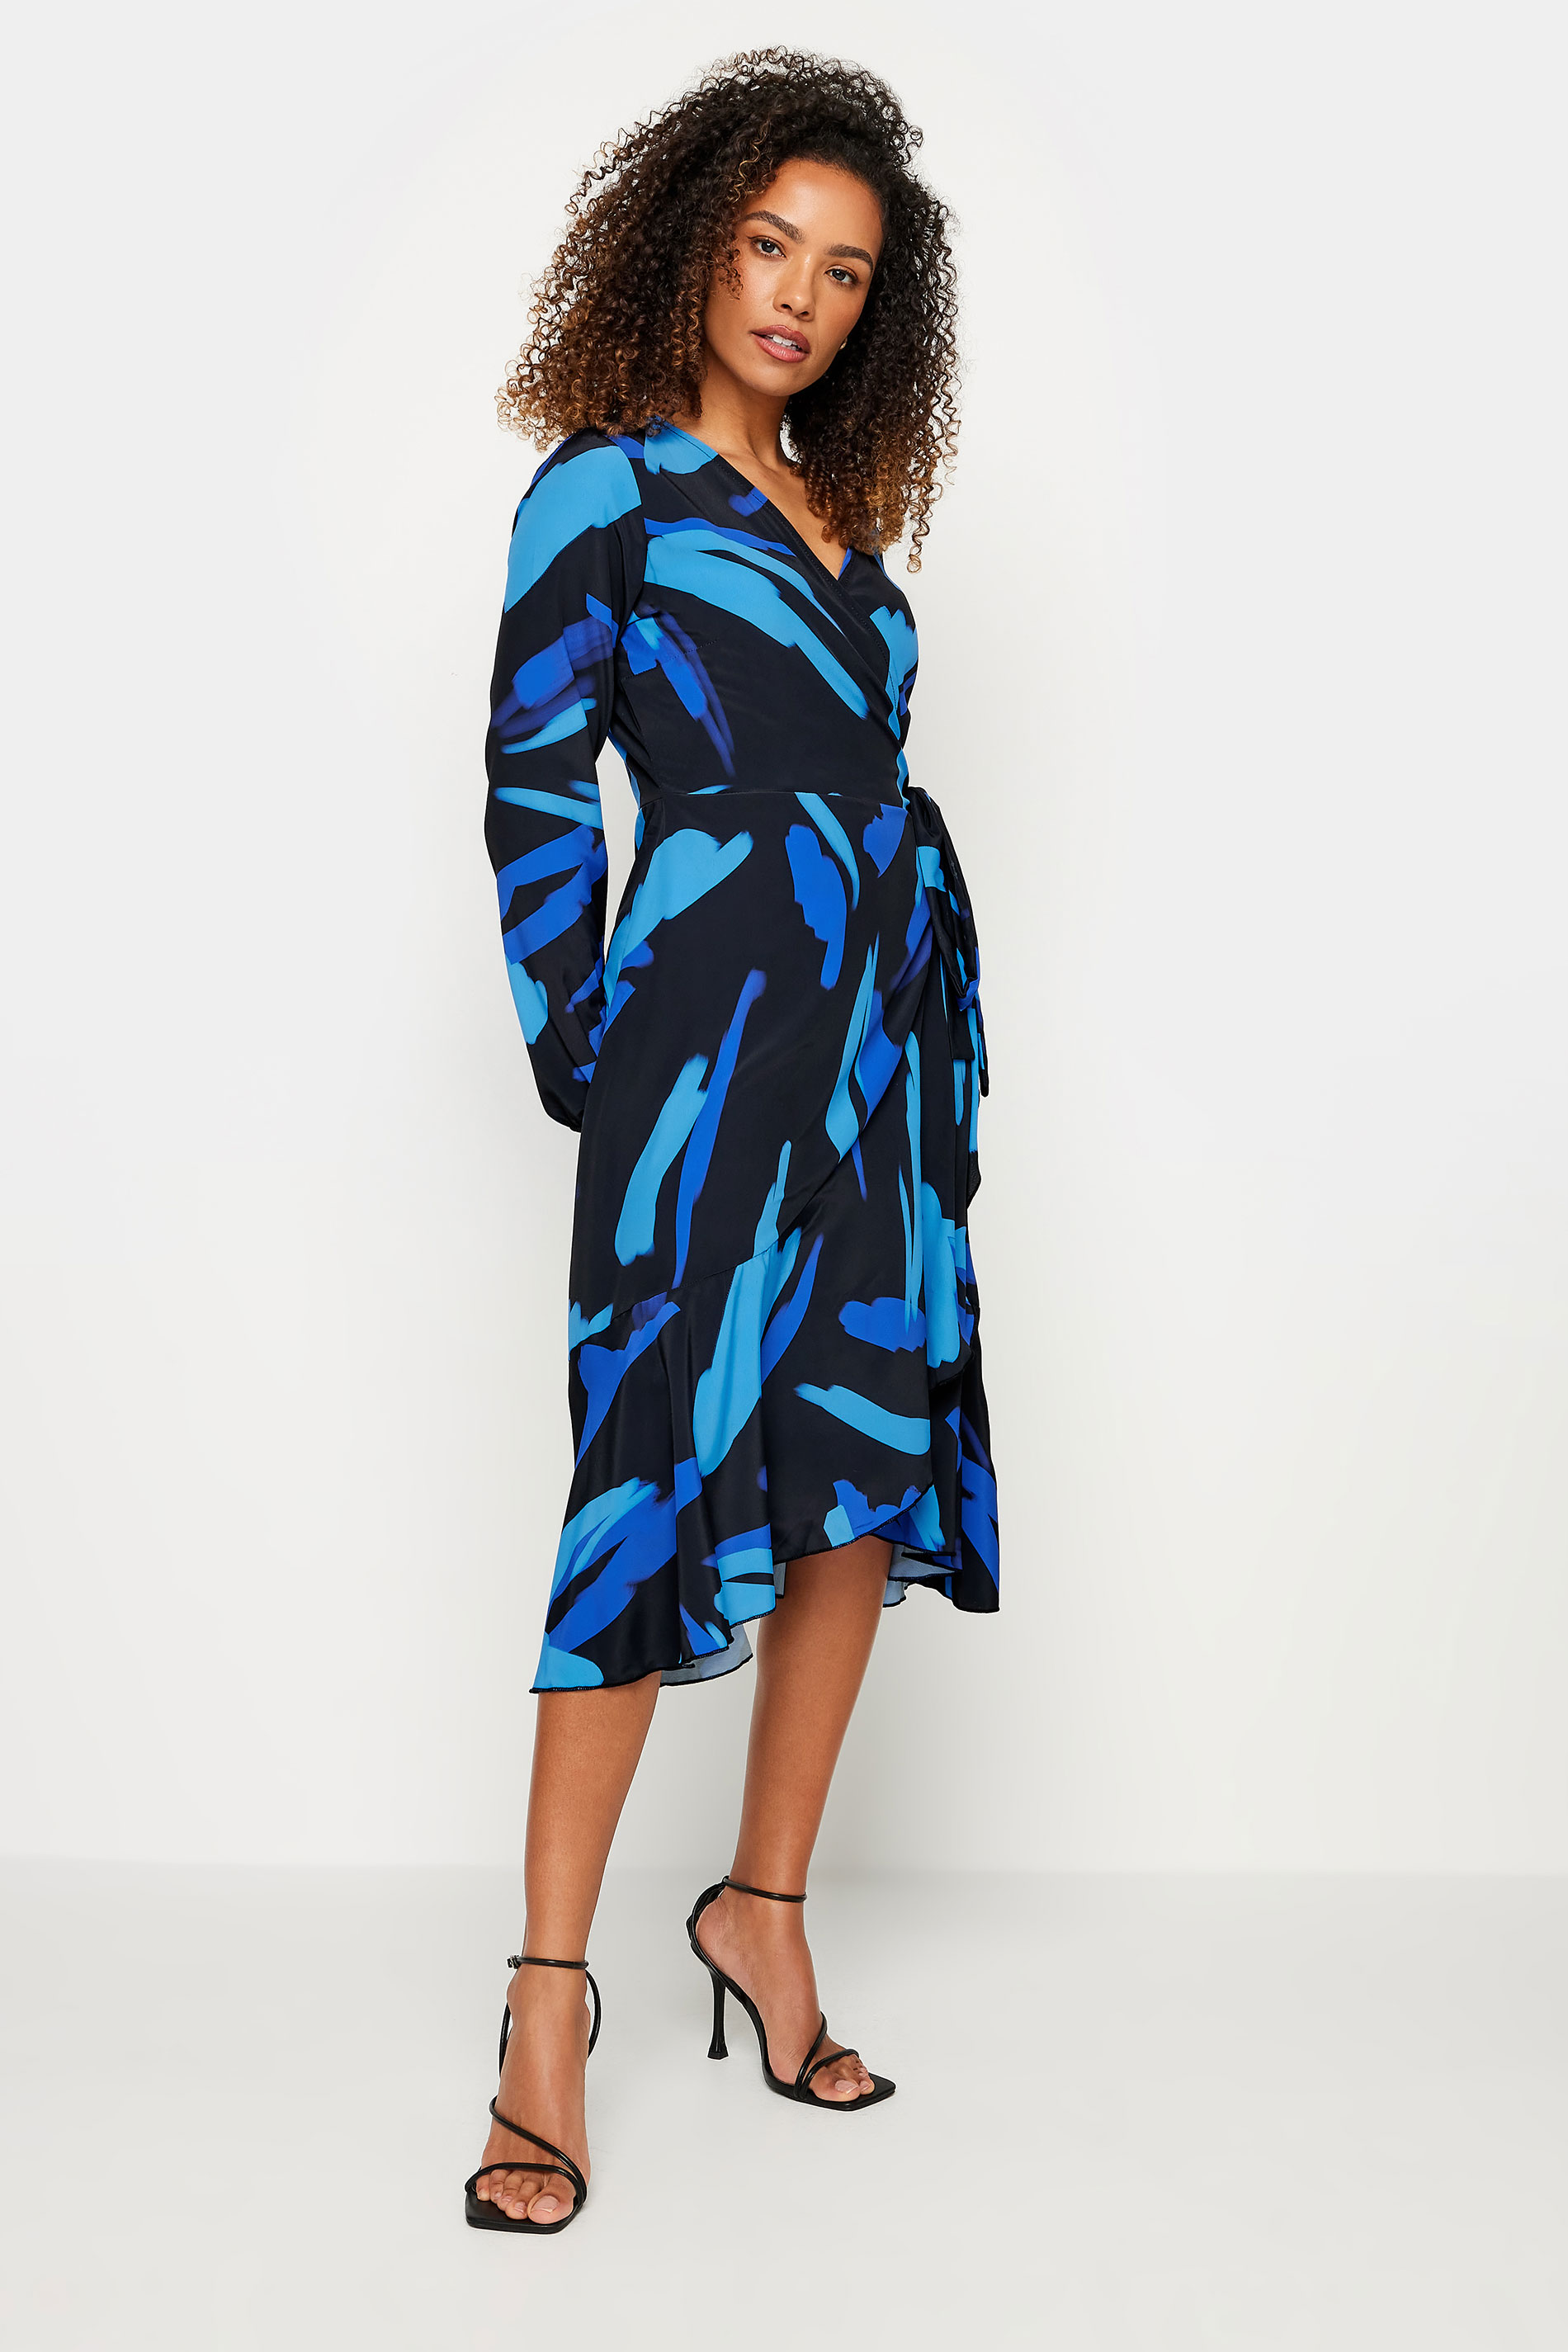 M&Co Black & Blue Abstract Print Wrap Dress | M&Co  2